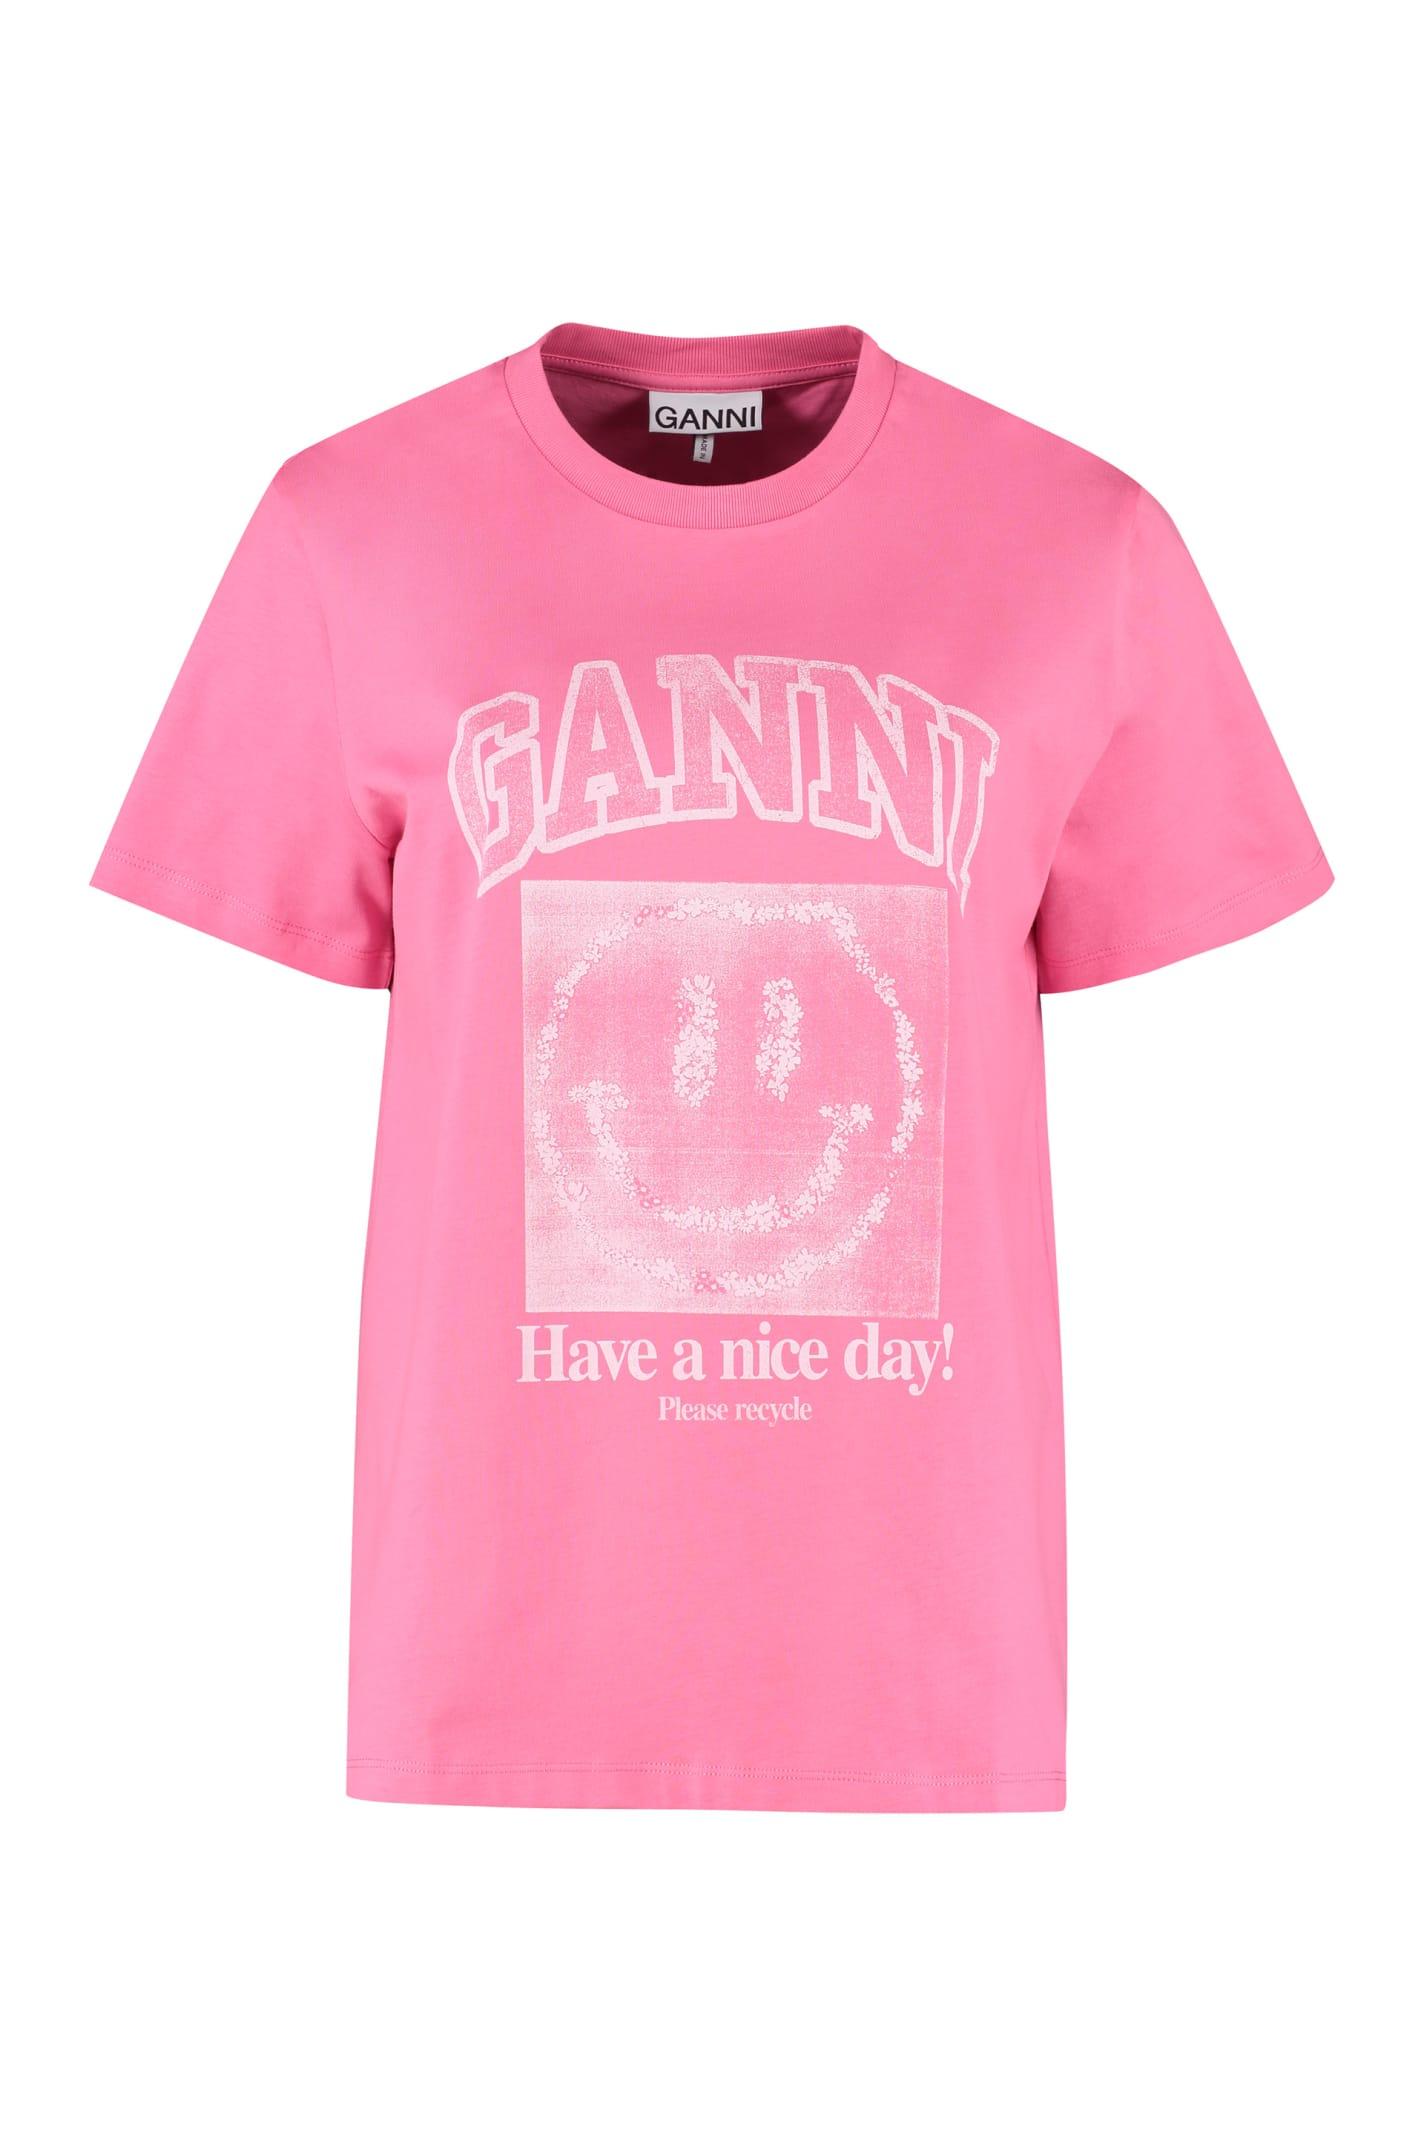 Ganni Smiley Cotton T-shirt in Pink | Lyst